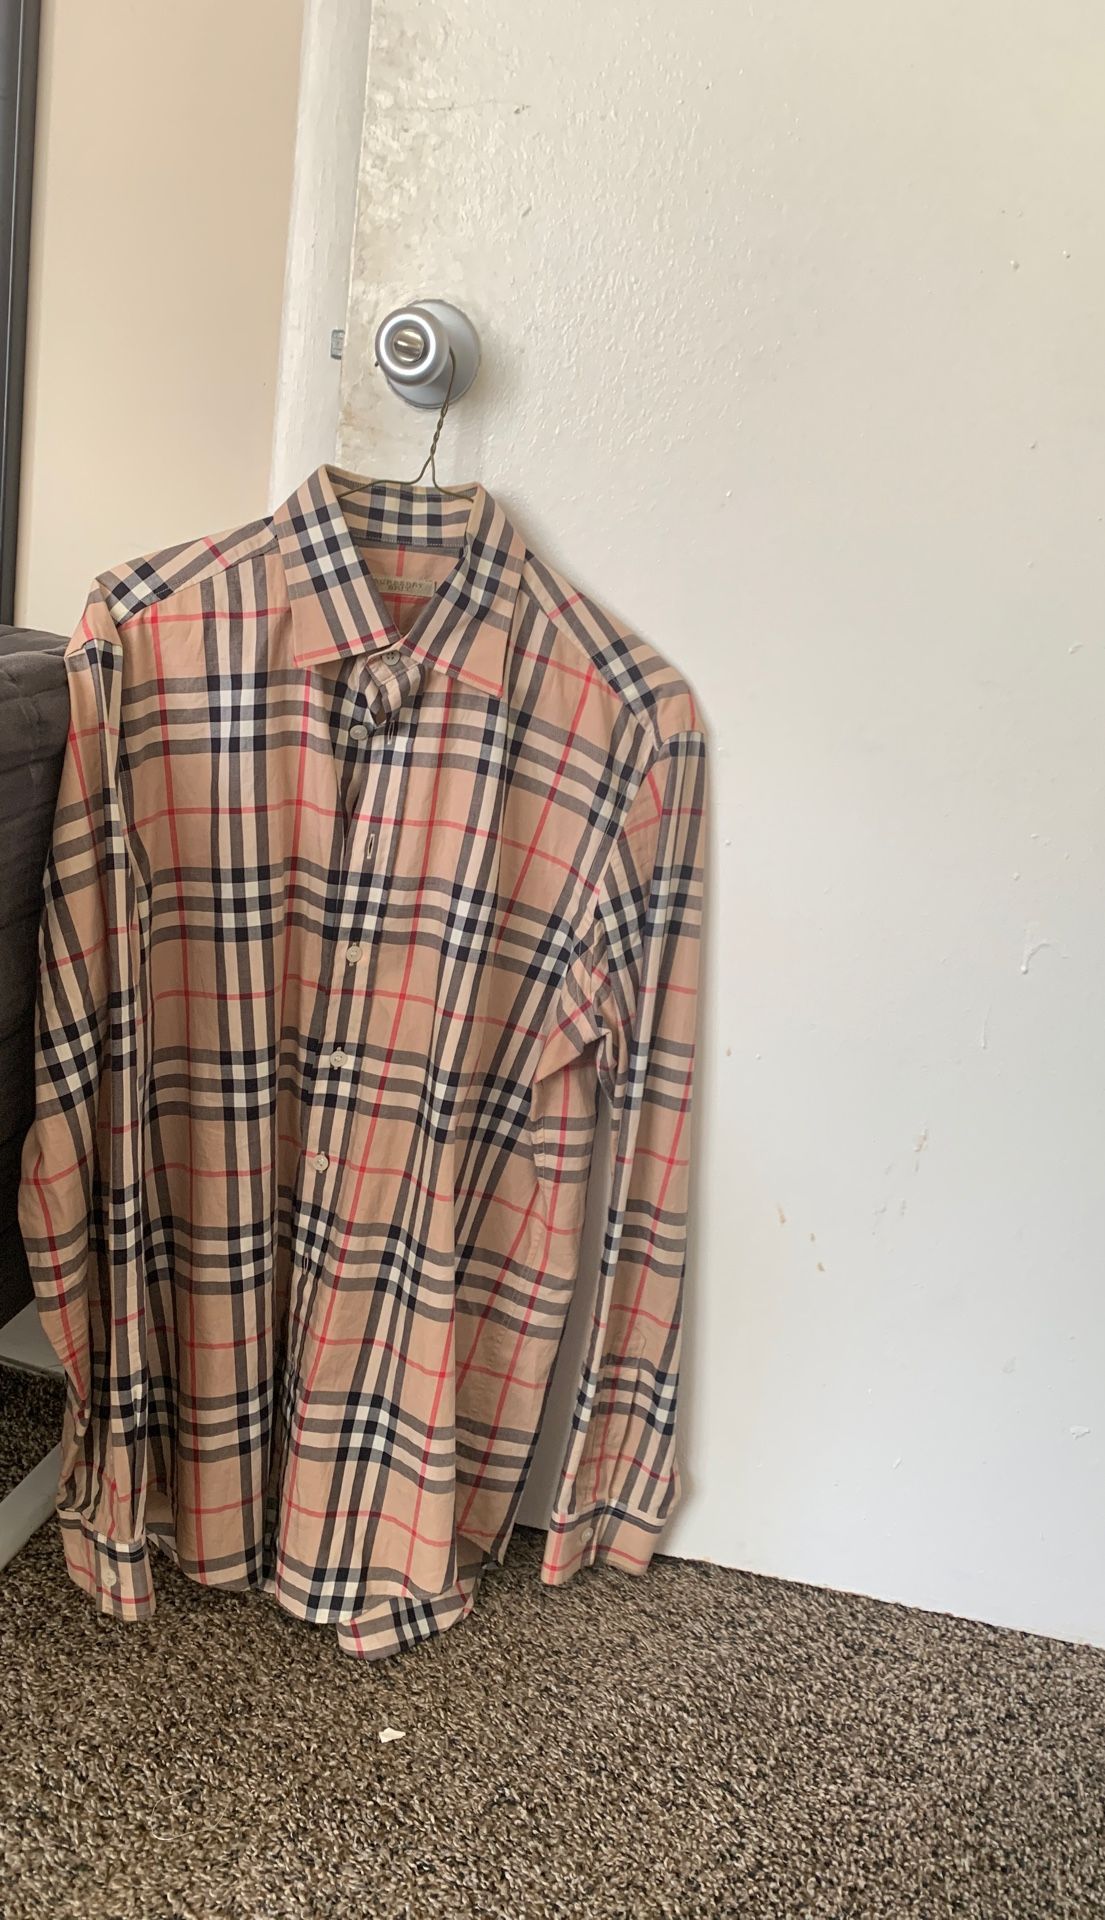 Authentic Men’s Burberry shirt (size medium)